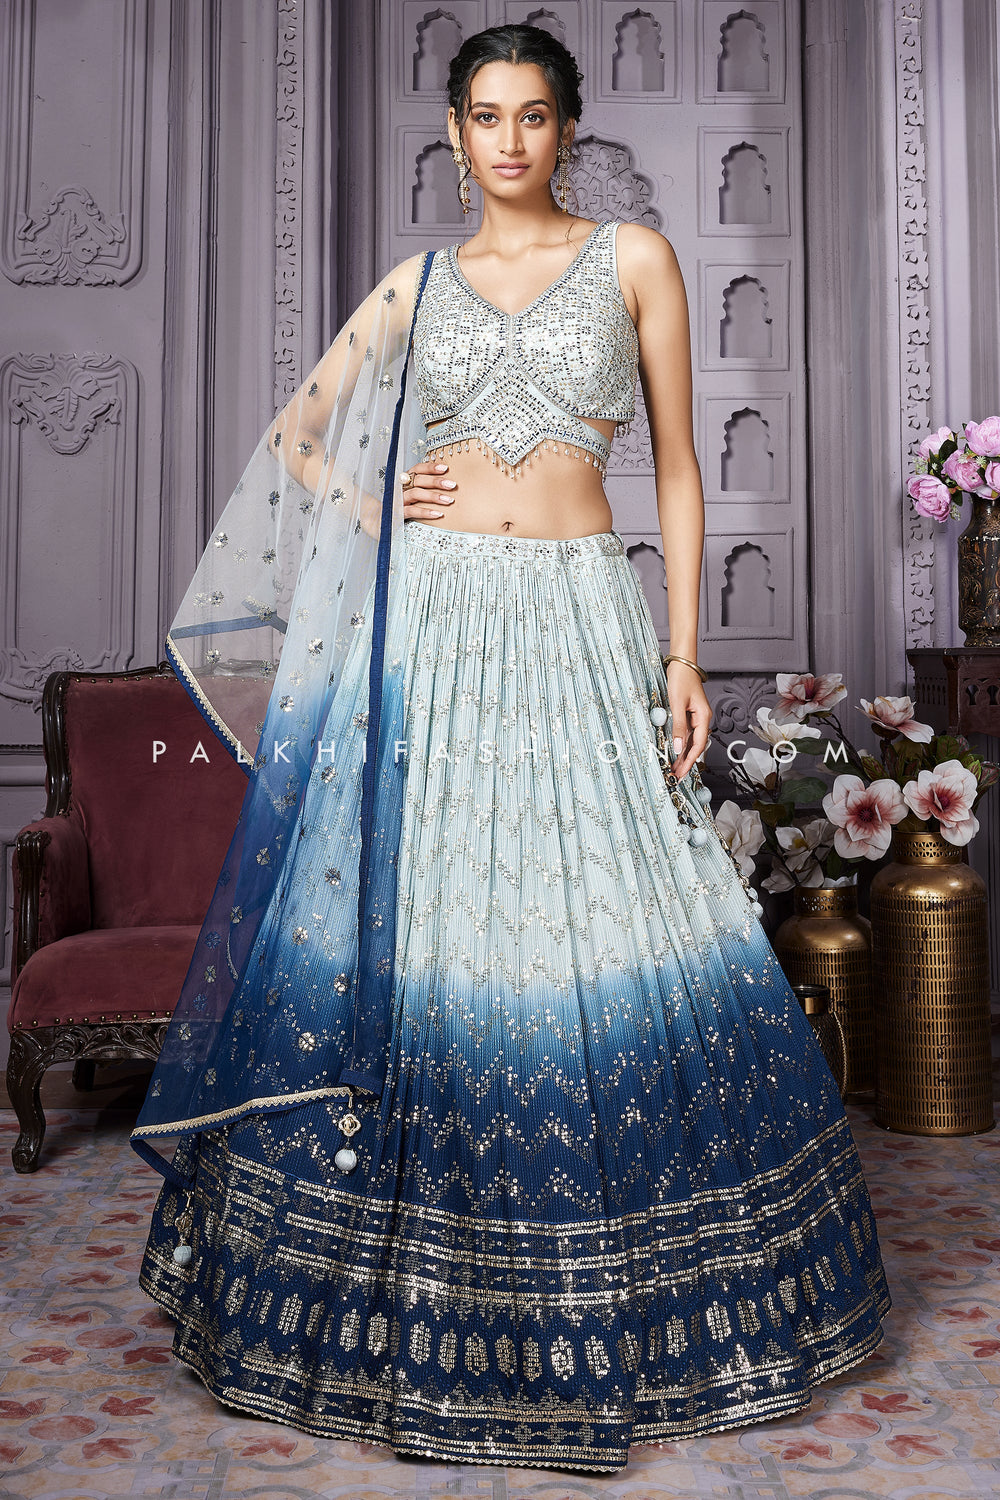 Elegant Blue Floral Embroidery Silk Wedding Lehenga Choli Wi